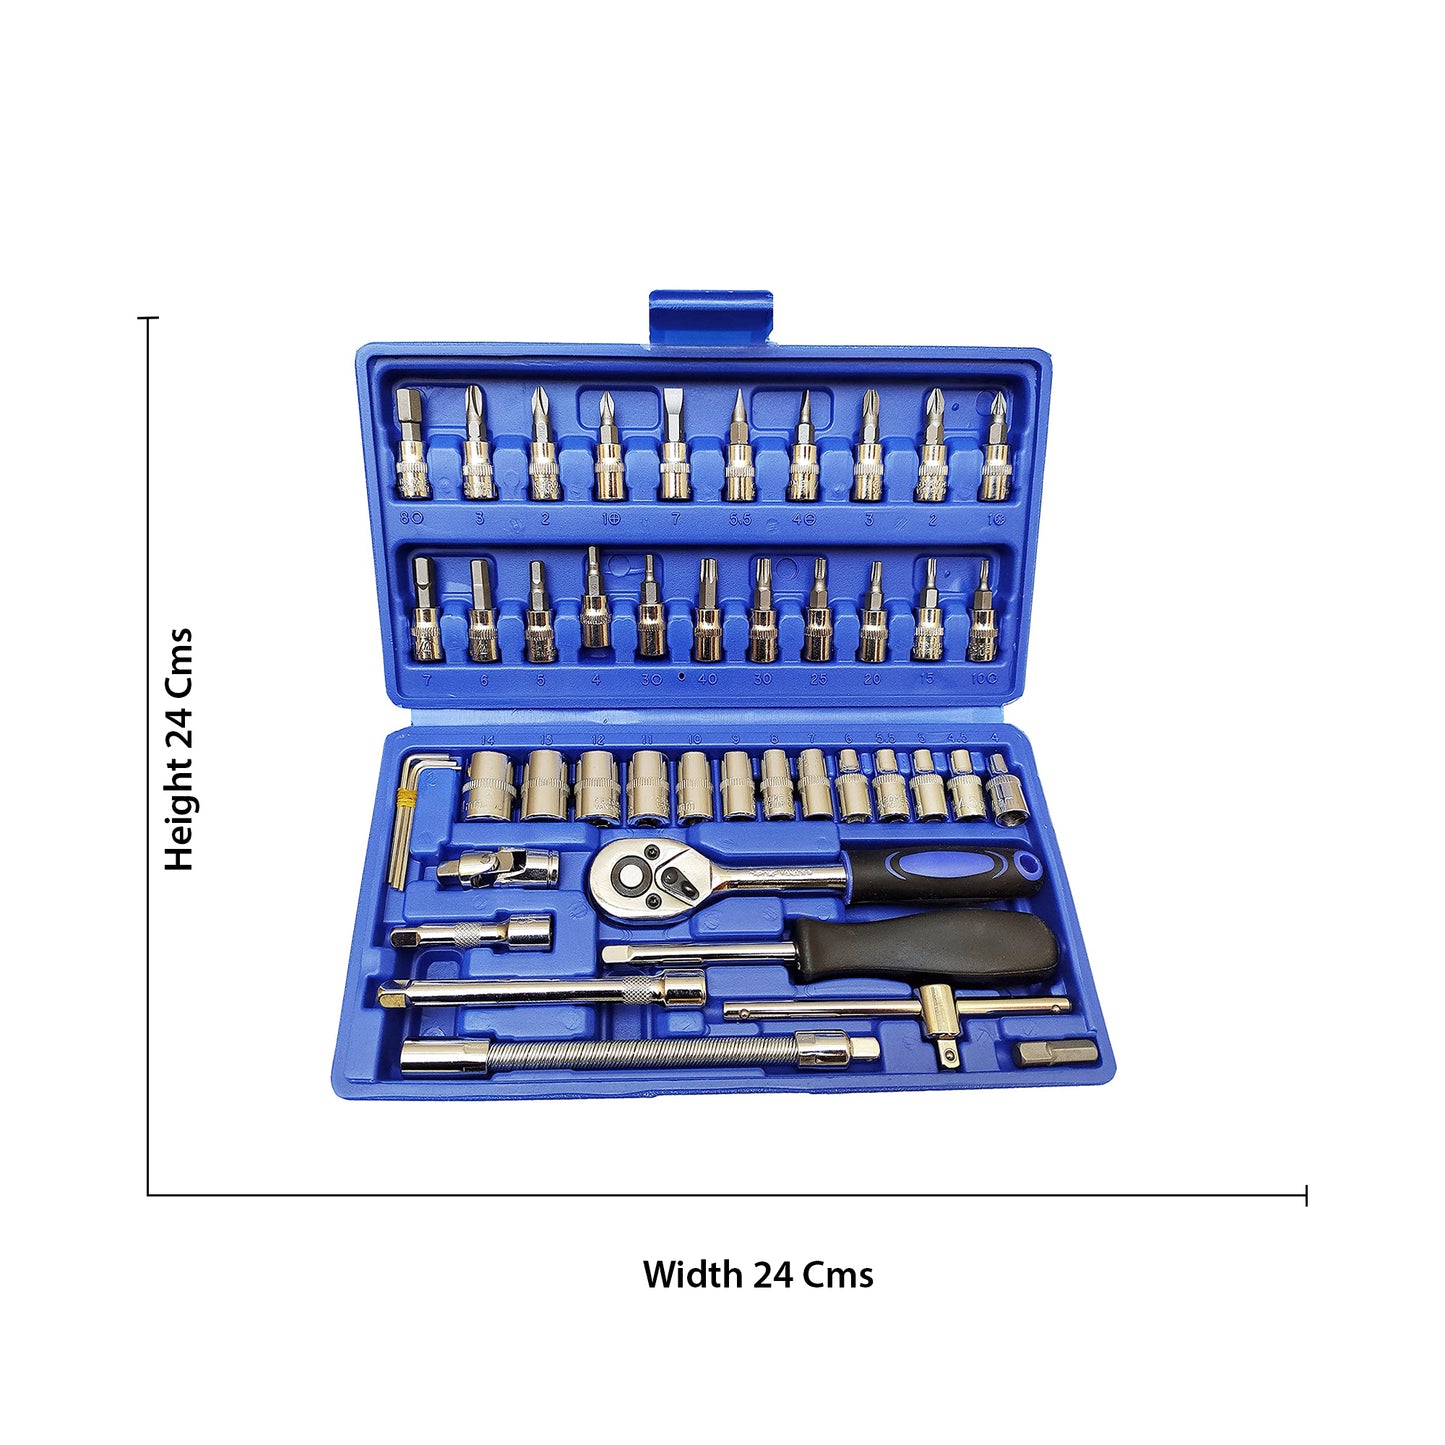 Aegon SS-46 1/4" 46 Pieces Heavy Duty Combinational Ratchet Socket Wrench Spanner Chrome Vanadium Hand Tool Kit For Repairing Work, DIY, Auto Repairs Car & Bike